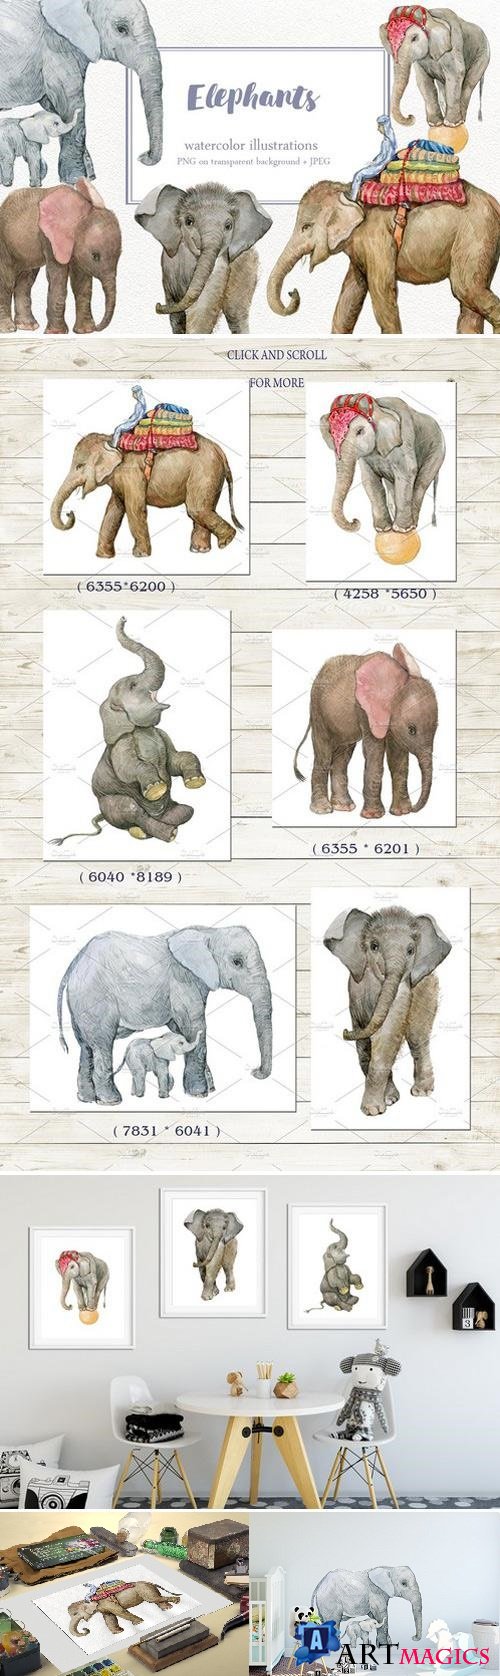 Elephants Illustrations watercolor 2276650